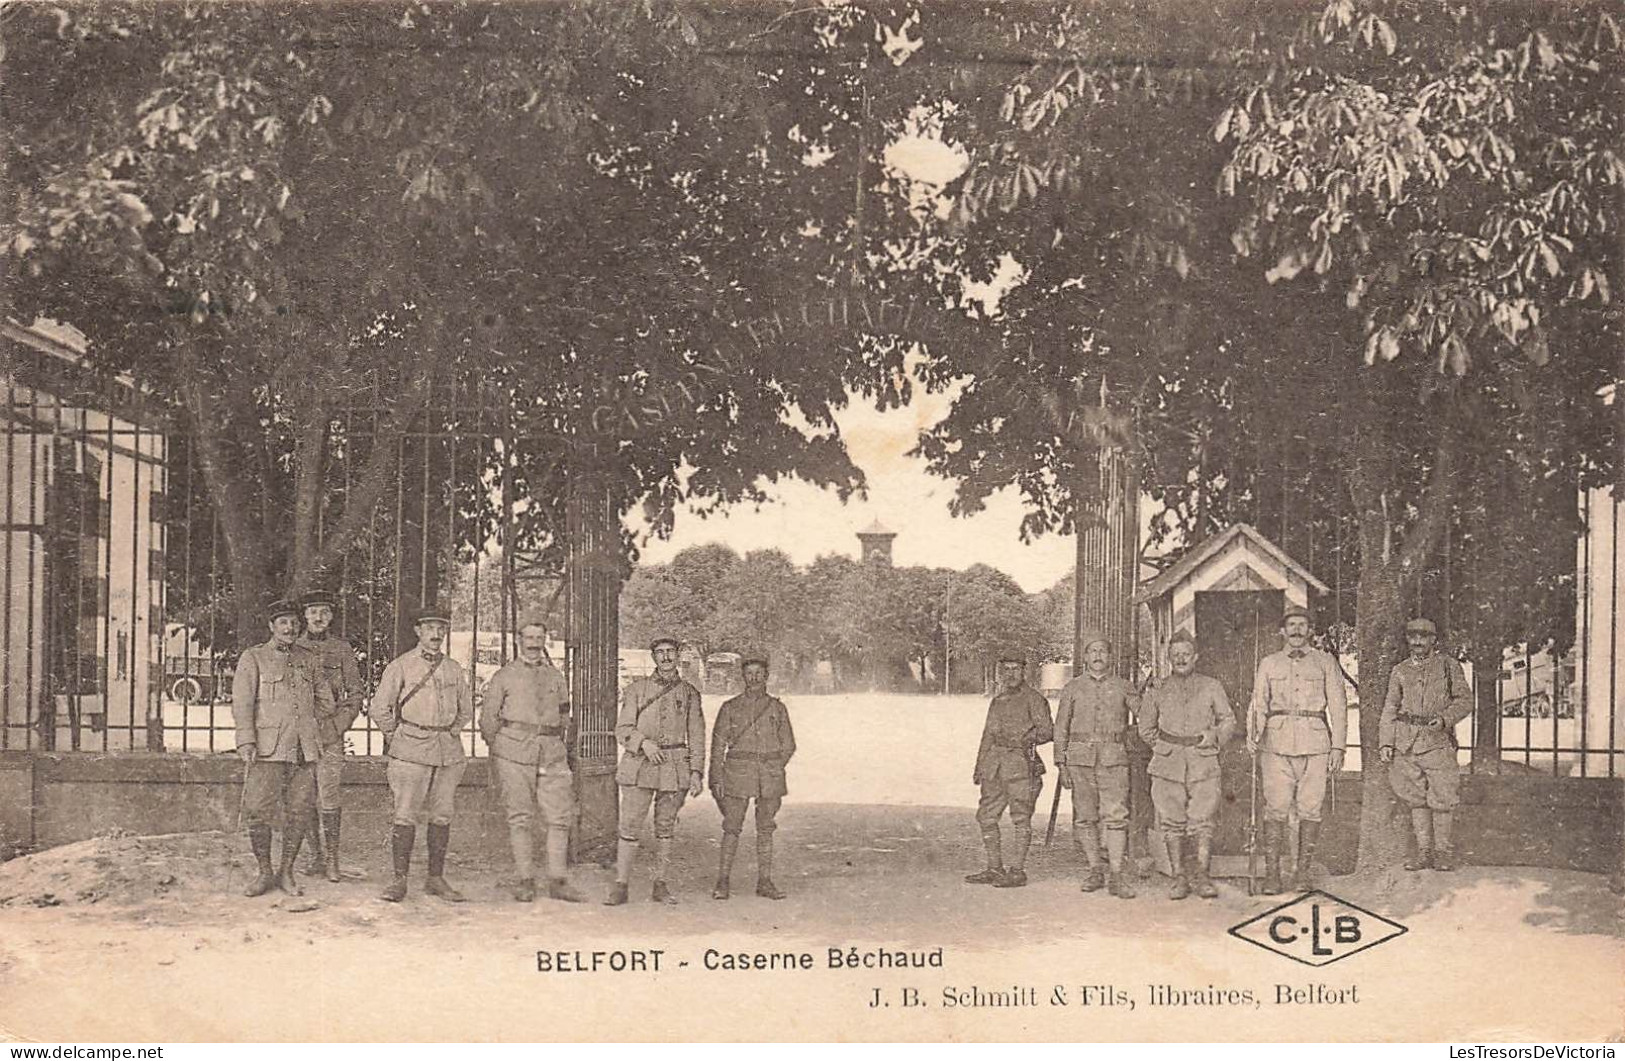 FRANCE - Belfort - Caserne Béchaud - J B Schmitt & Fils - Libraires - Belfort - Des Militaires - Carte Postale Ancienne - Belfort - Stadt